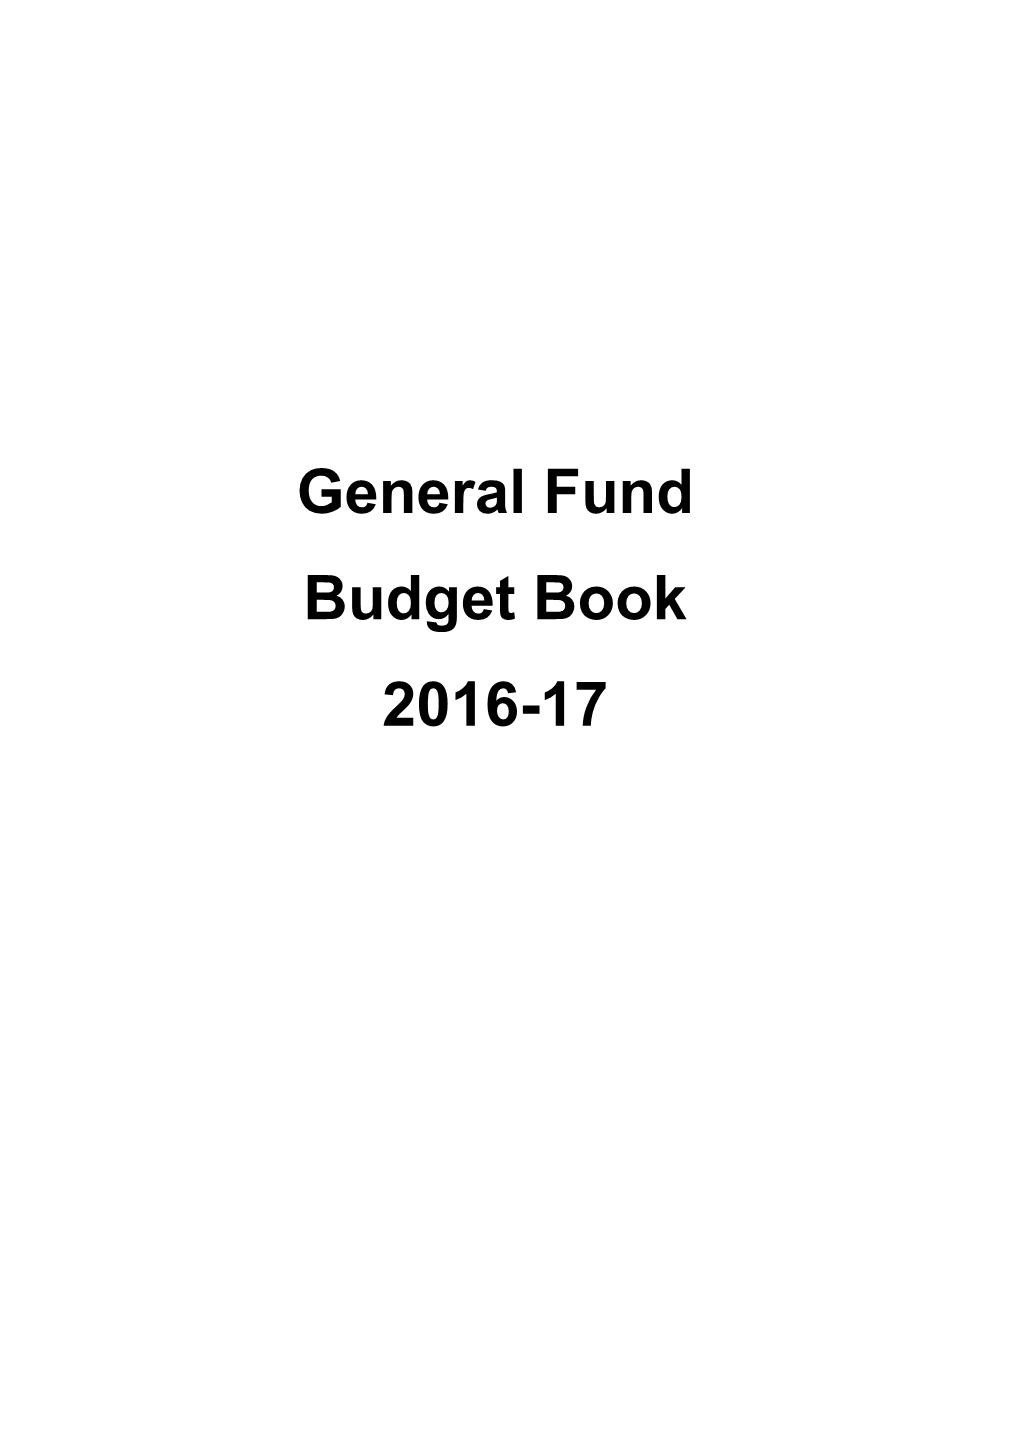 General Fund Budget Book 2016-17